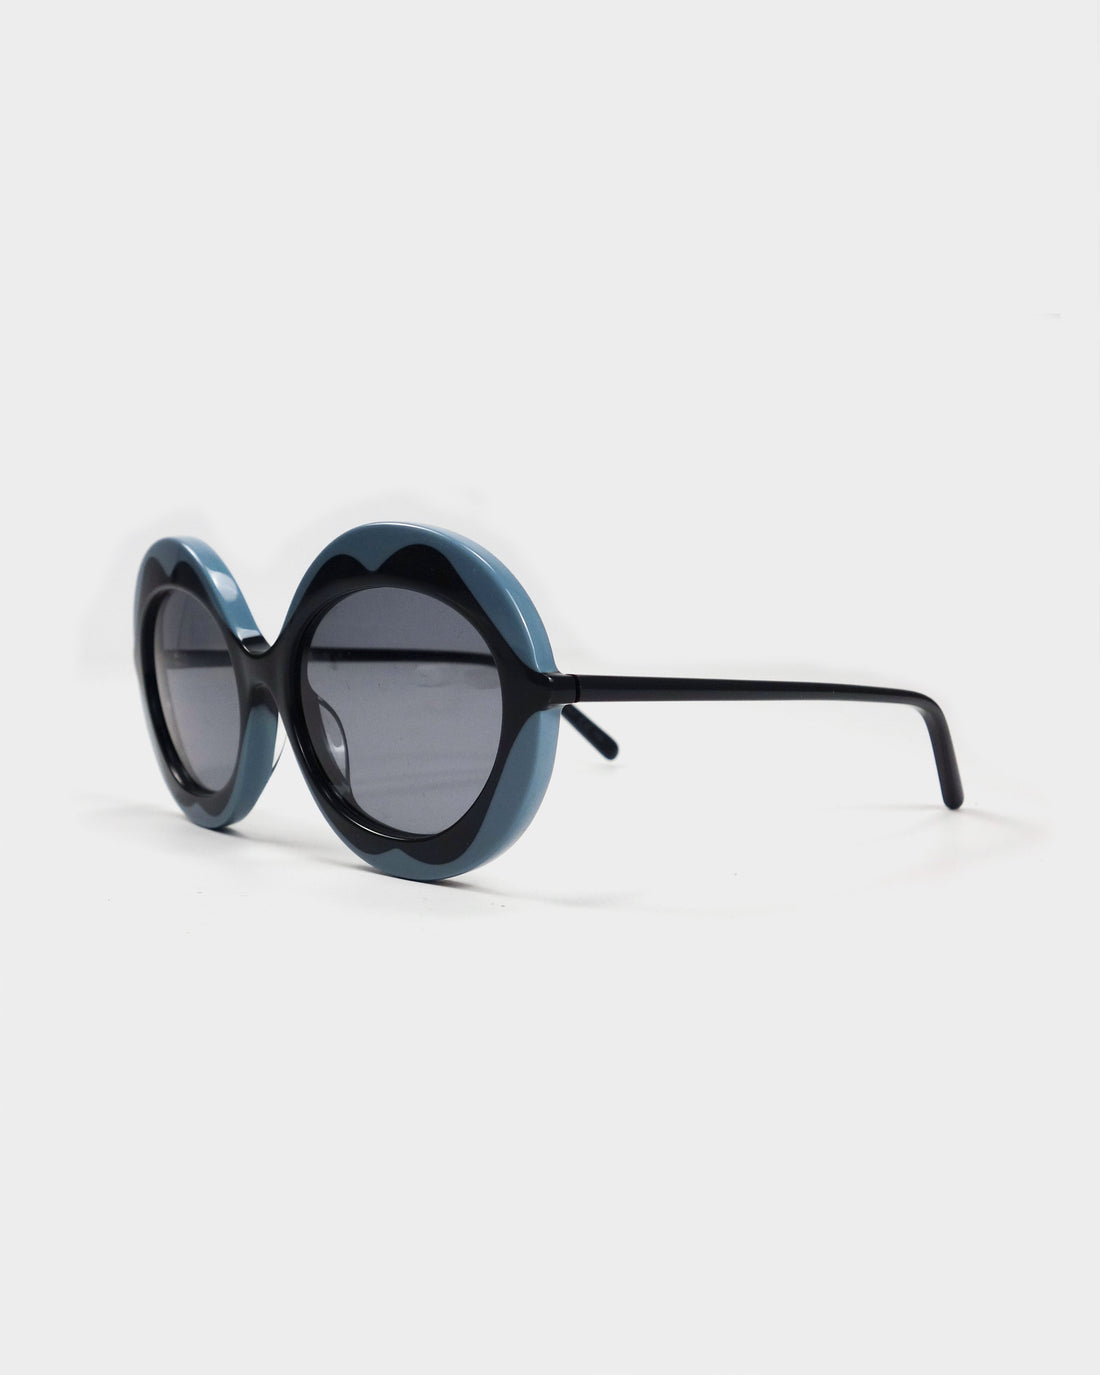 Marni Blue Lips Sunglasses 2000's